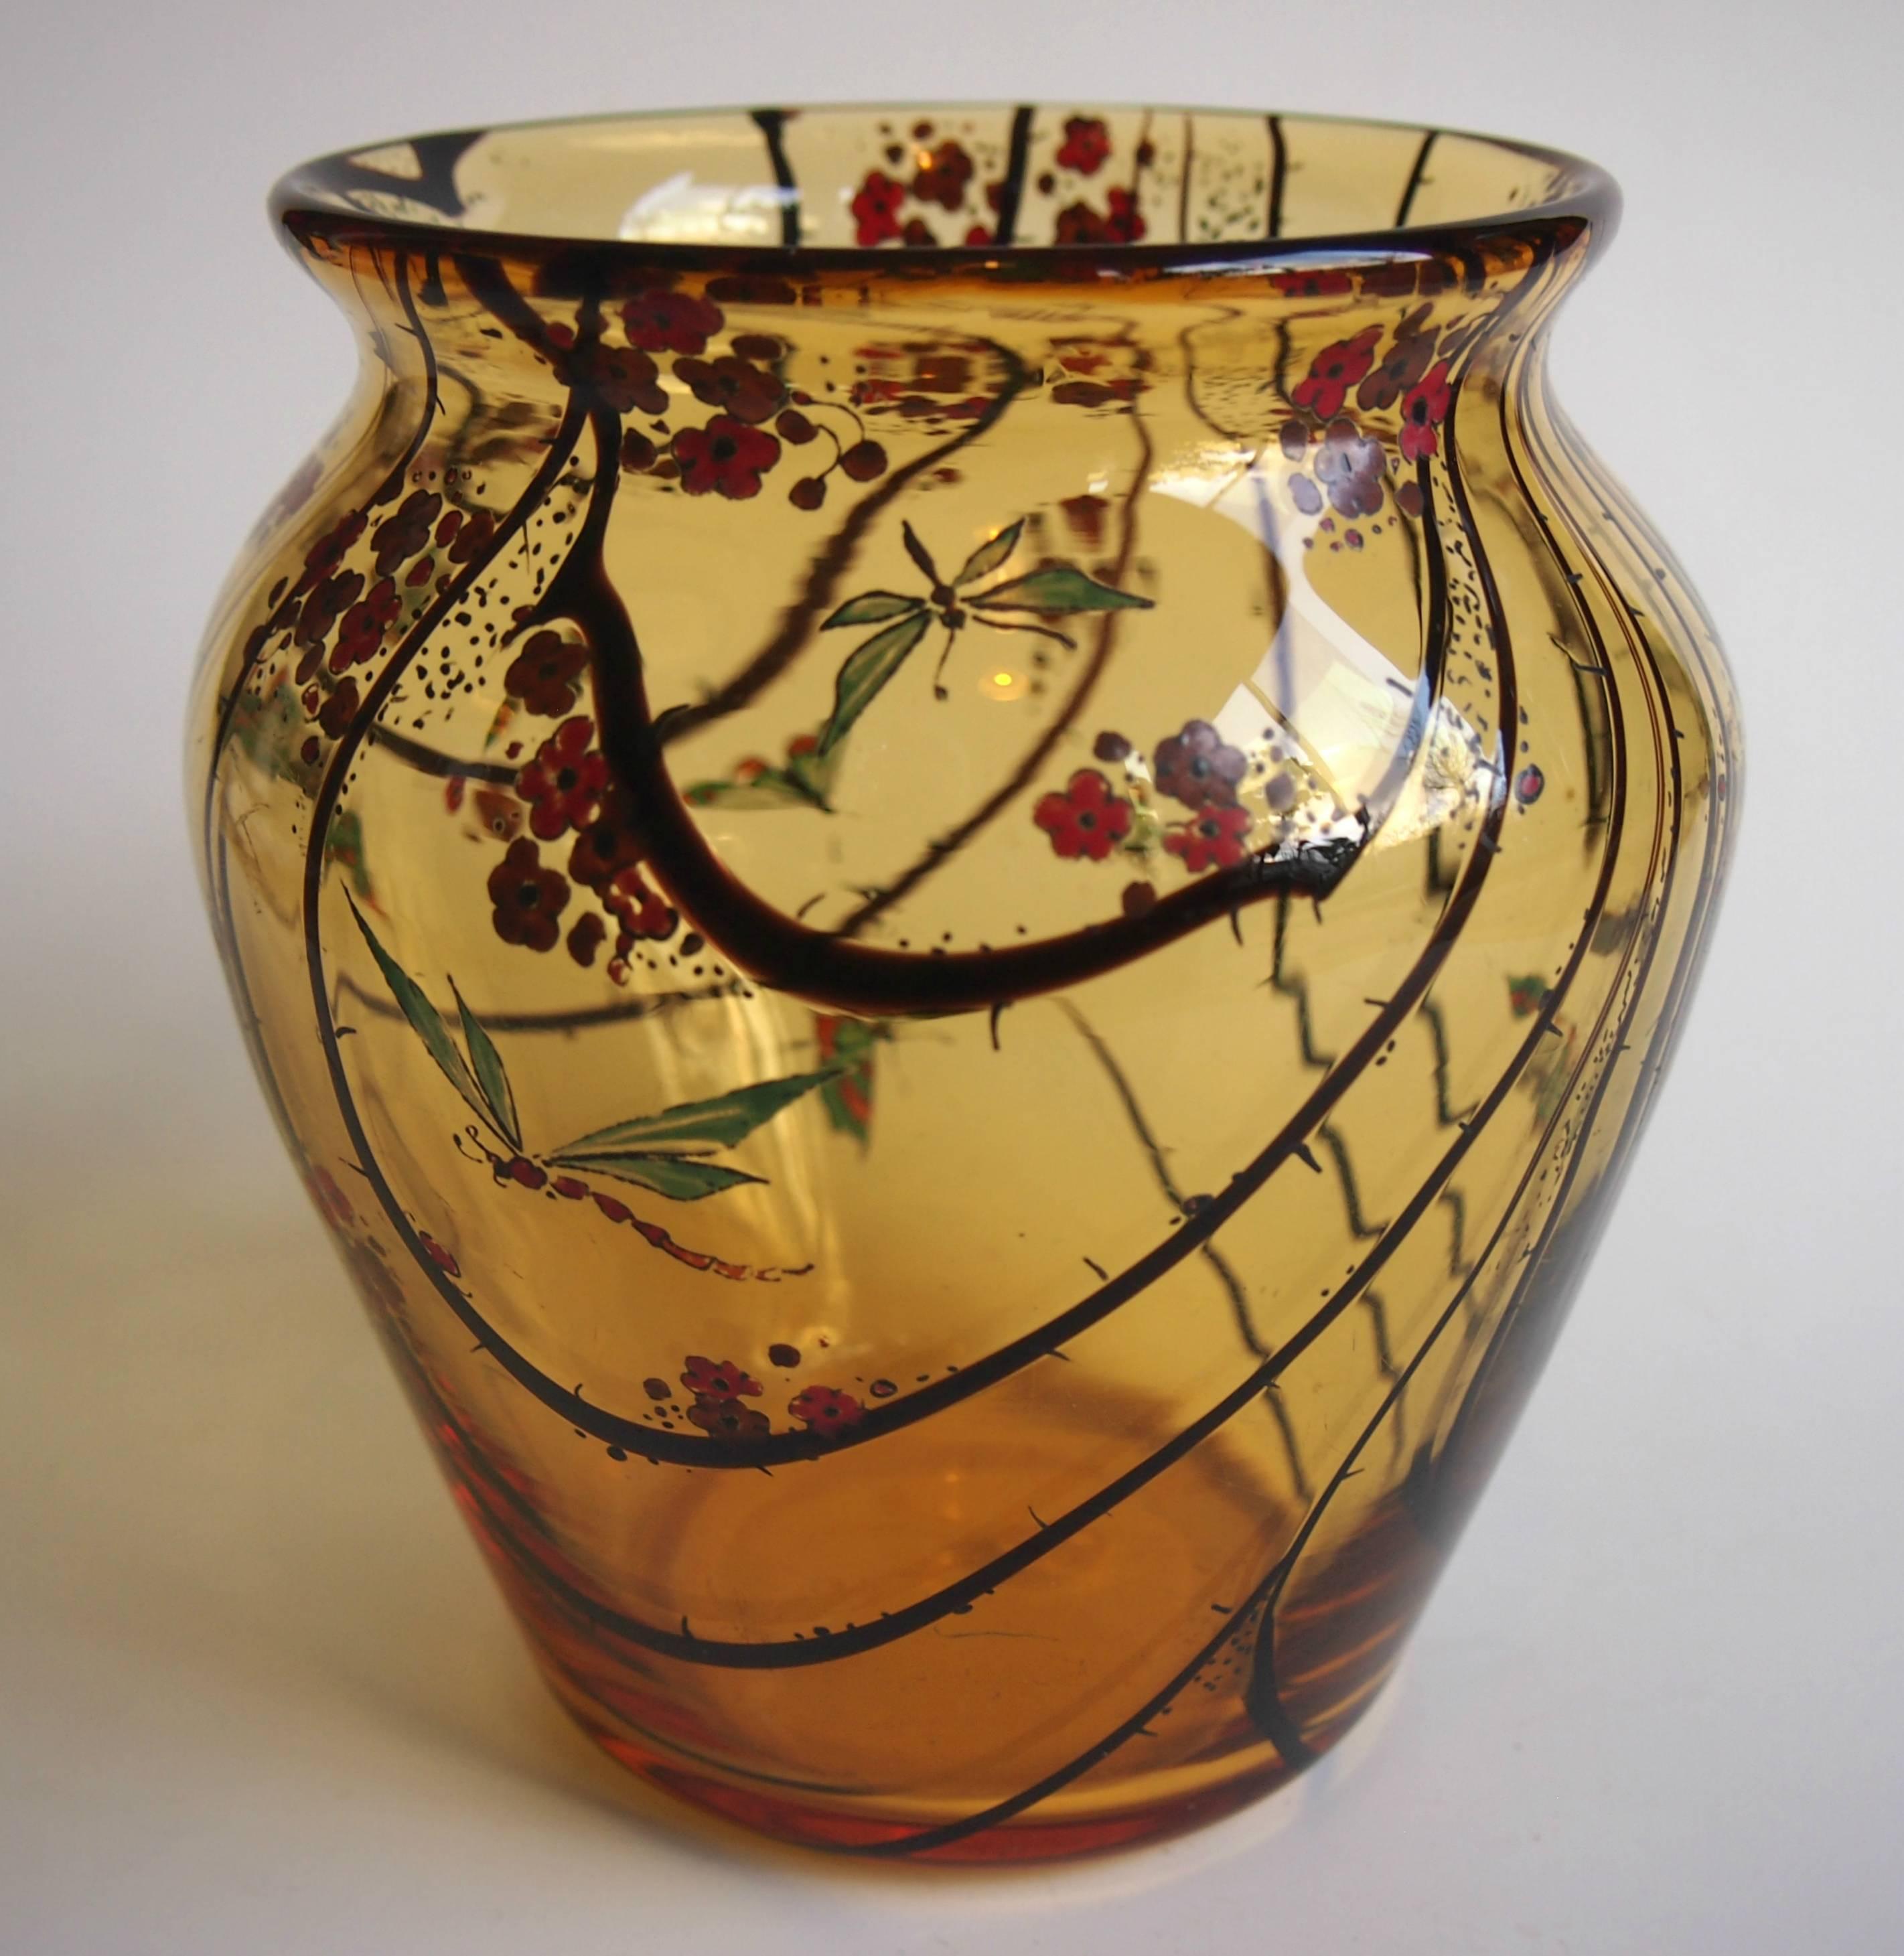 English Art Deco Stuart Amber/Frond Enamelled Glass Vase w/Butterflies and Dragonflies